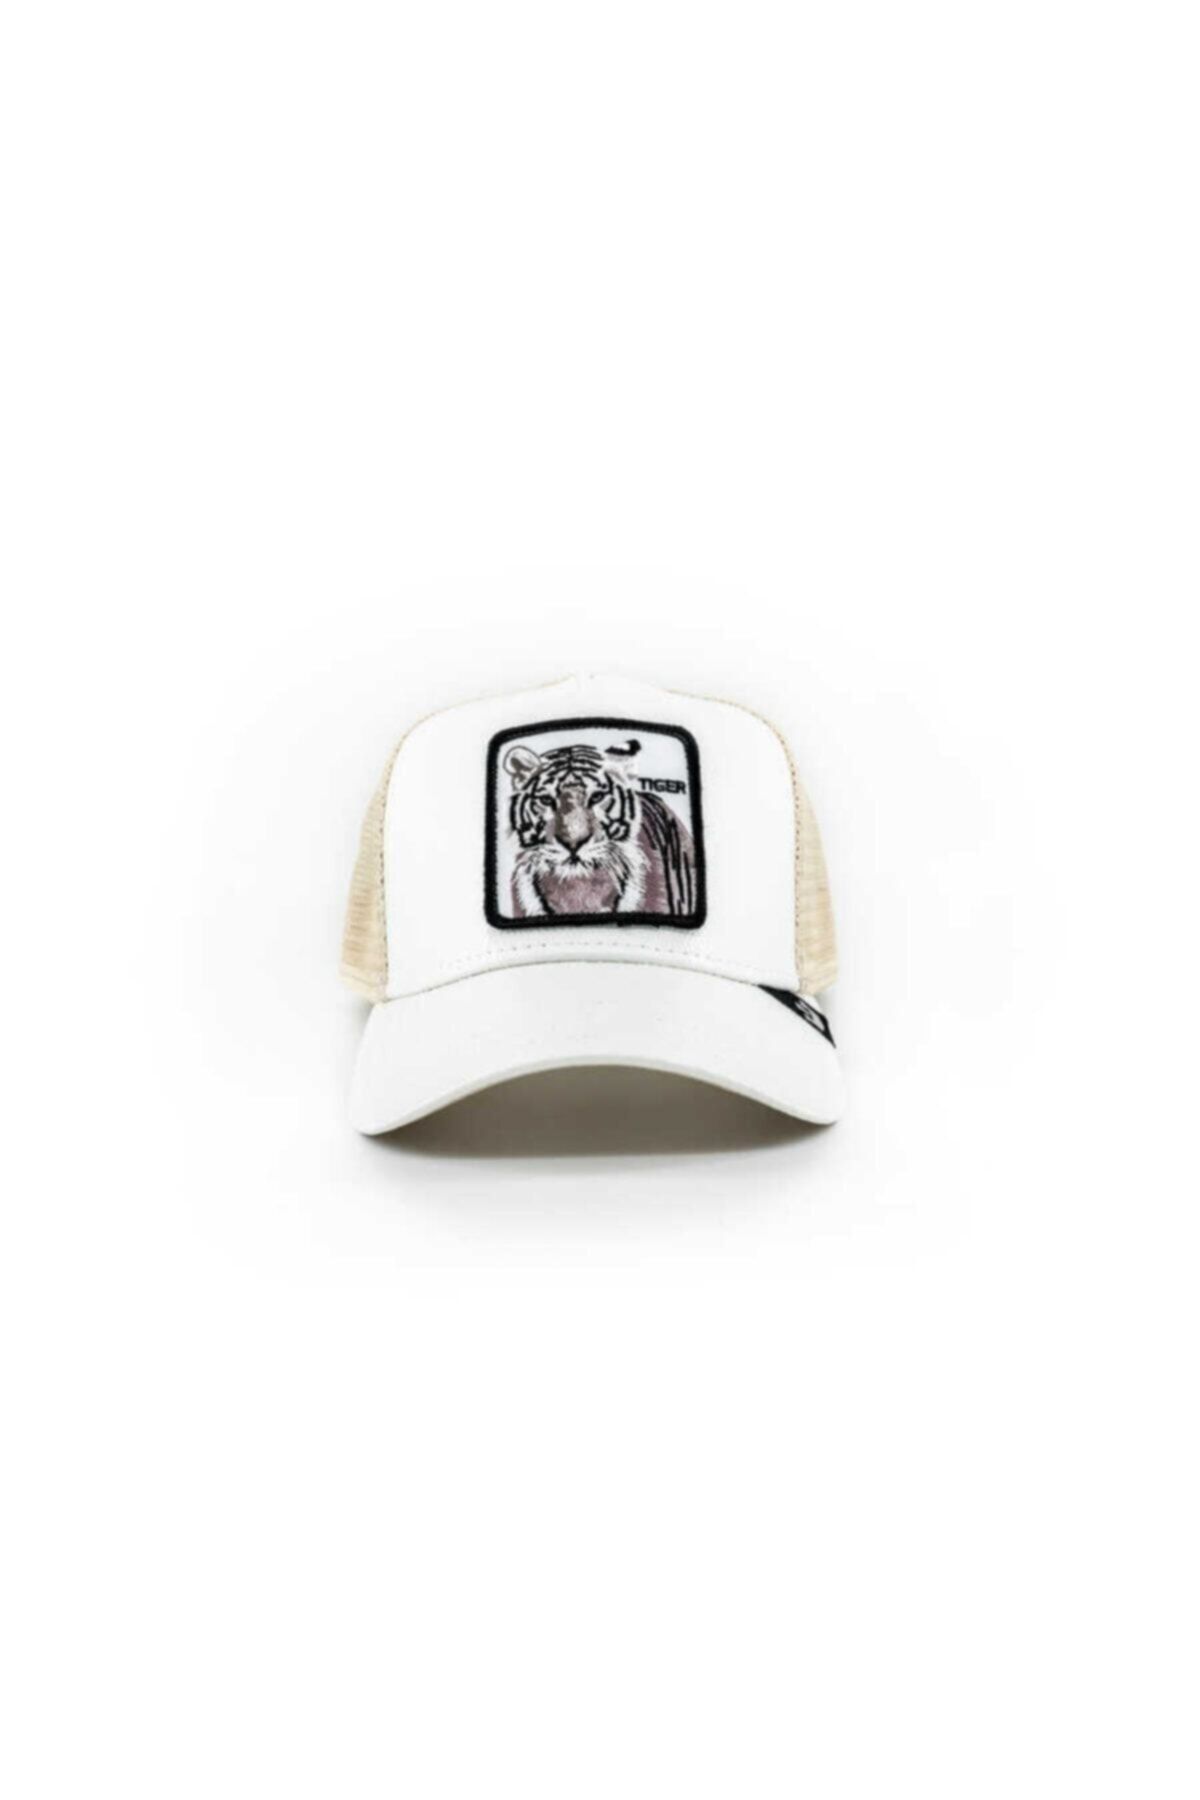 Goorin Bros Unisex Killer Tiger Beyaz Standart Şapka 101-0606